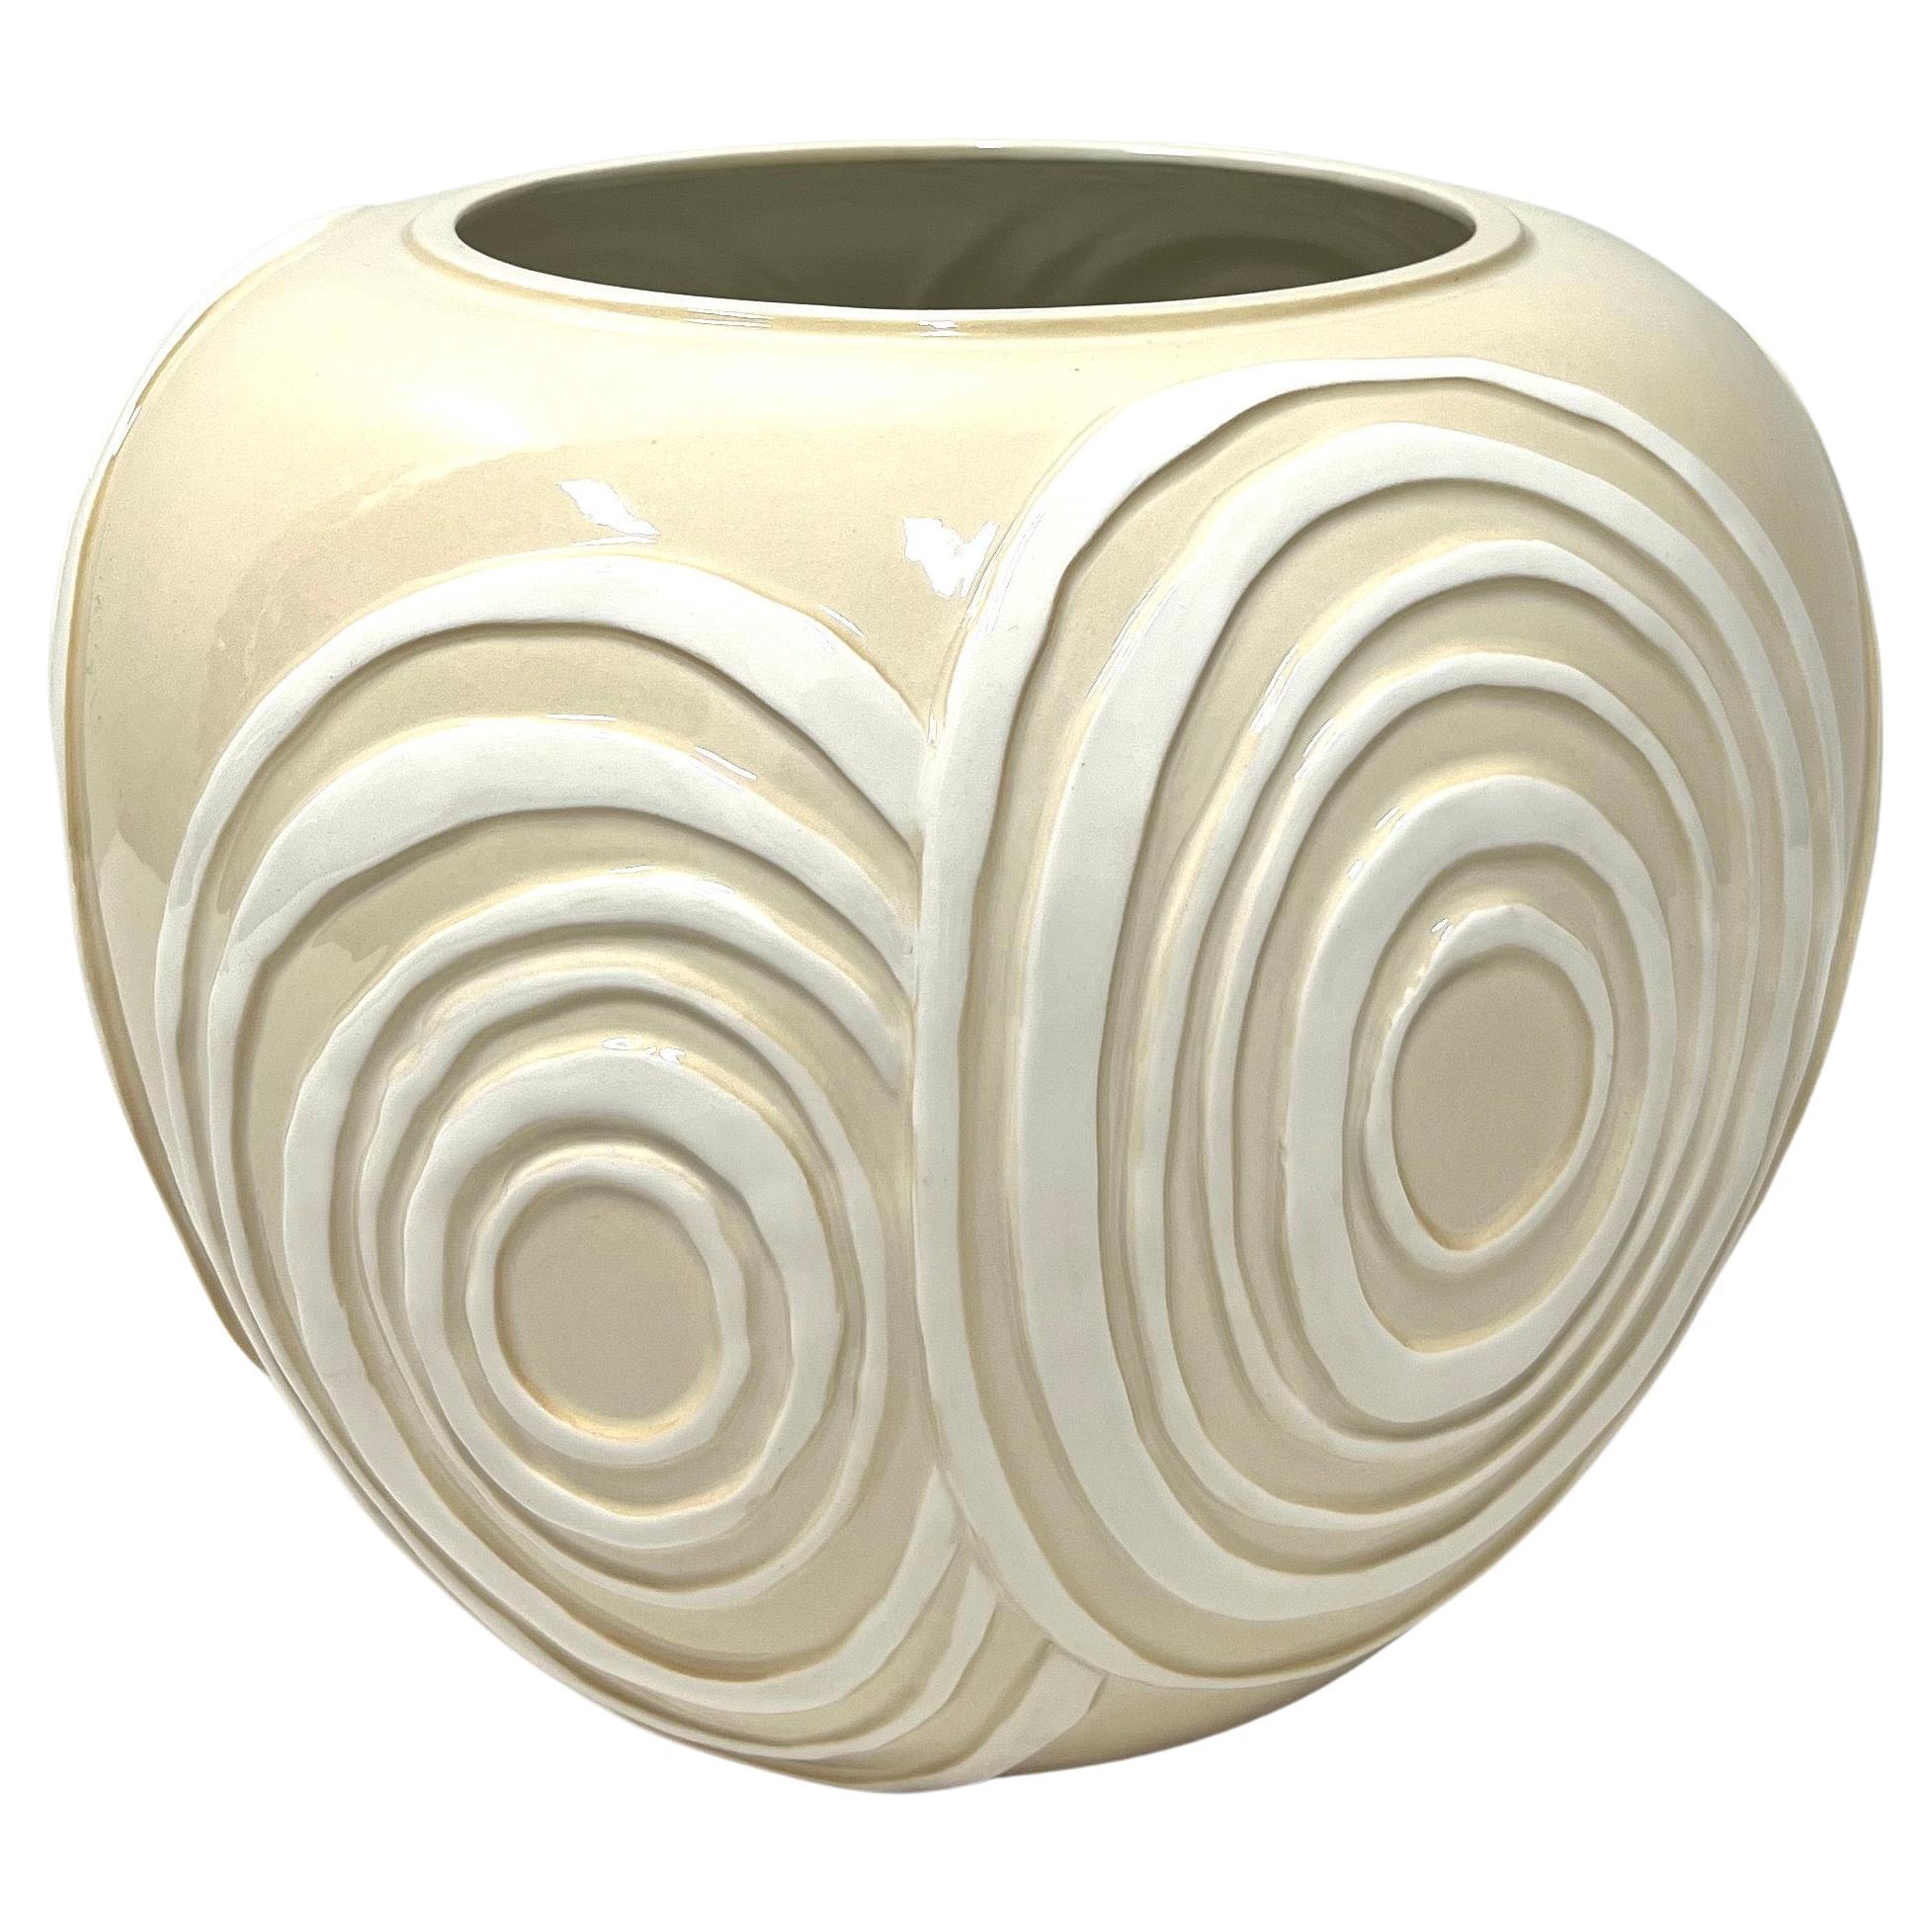 1980's Ceramic Contemporary Swirl Design Large Bowl